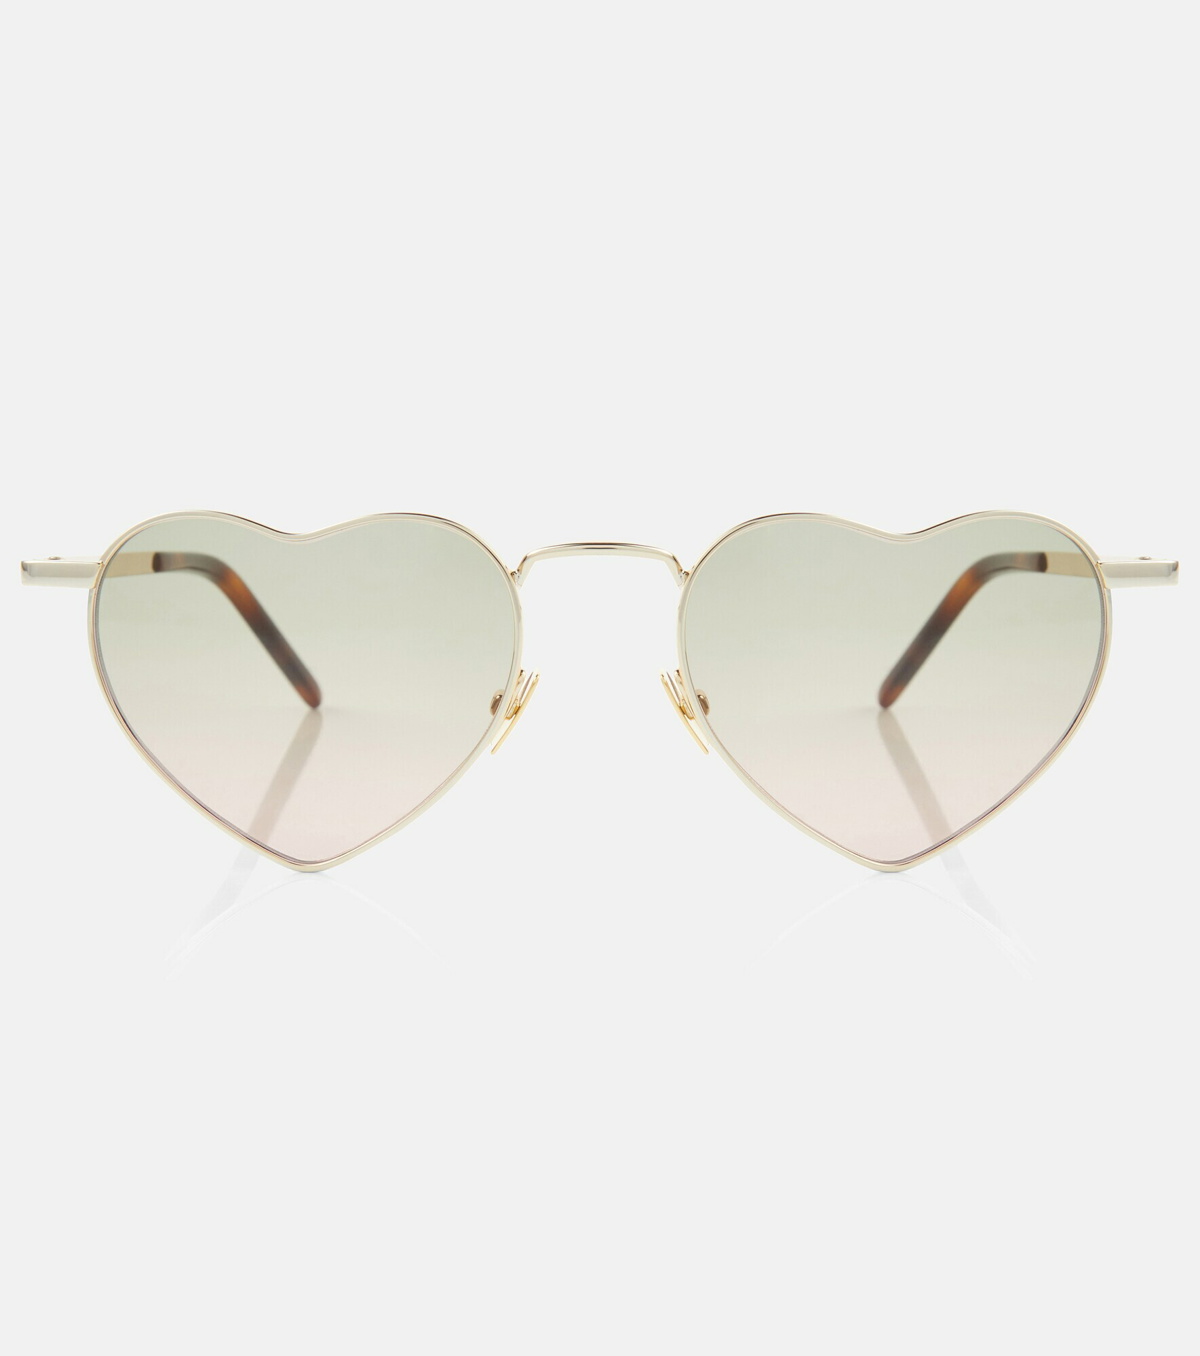 SAINT LAURENT EYEWEAR Leon aviator-style silver-tone sunglasses